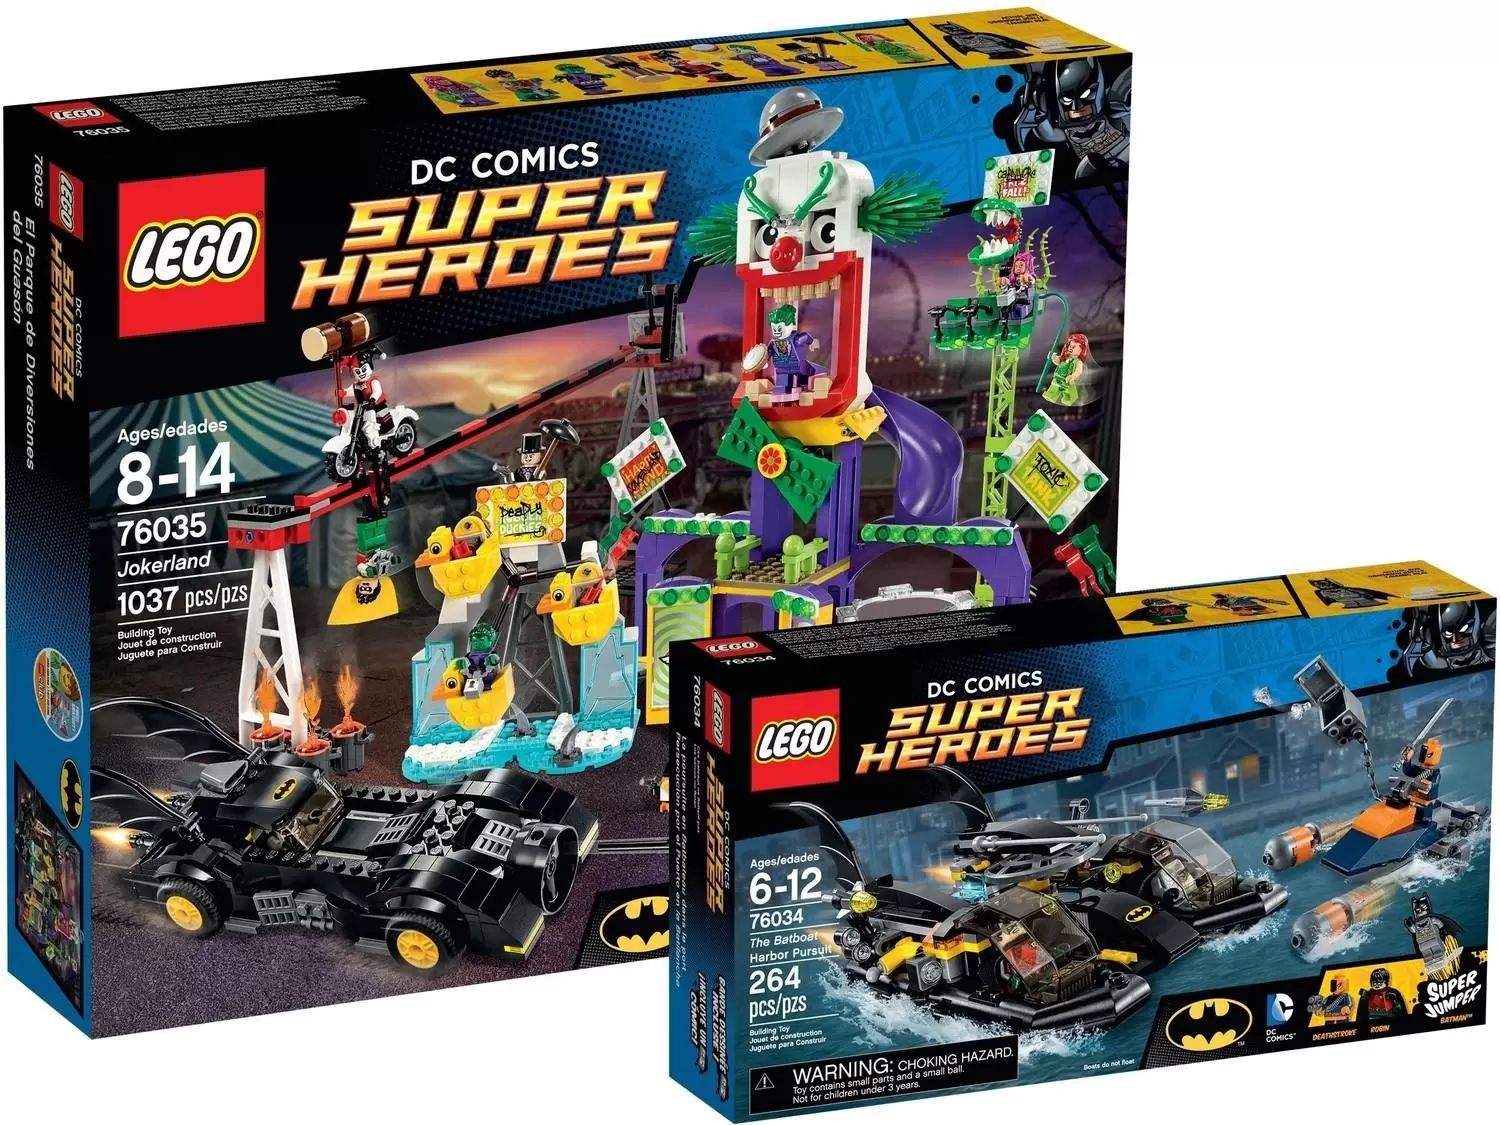 LEGO DC Comics Super Heroes - Super Heroes DC Collection